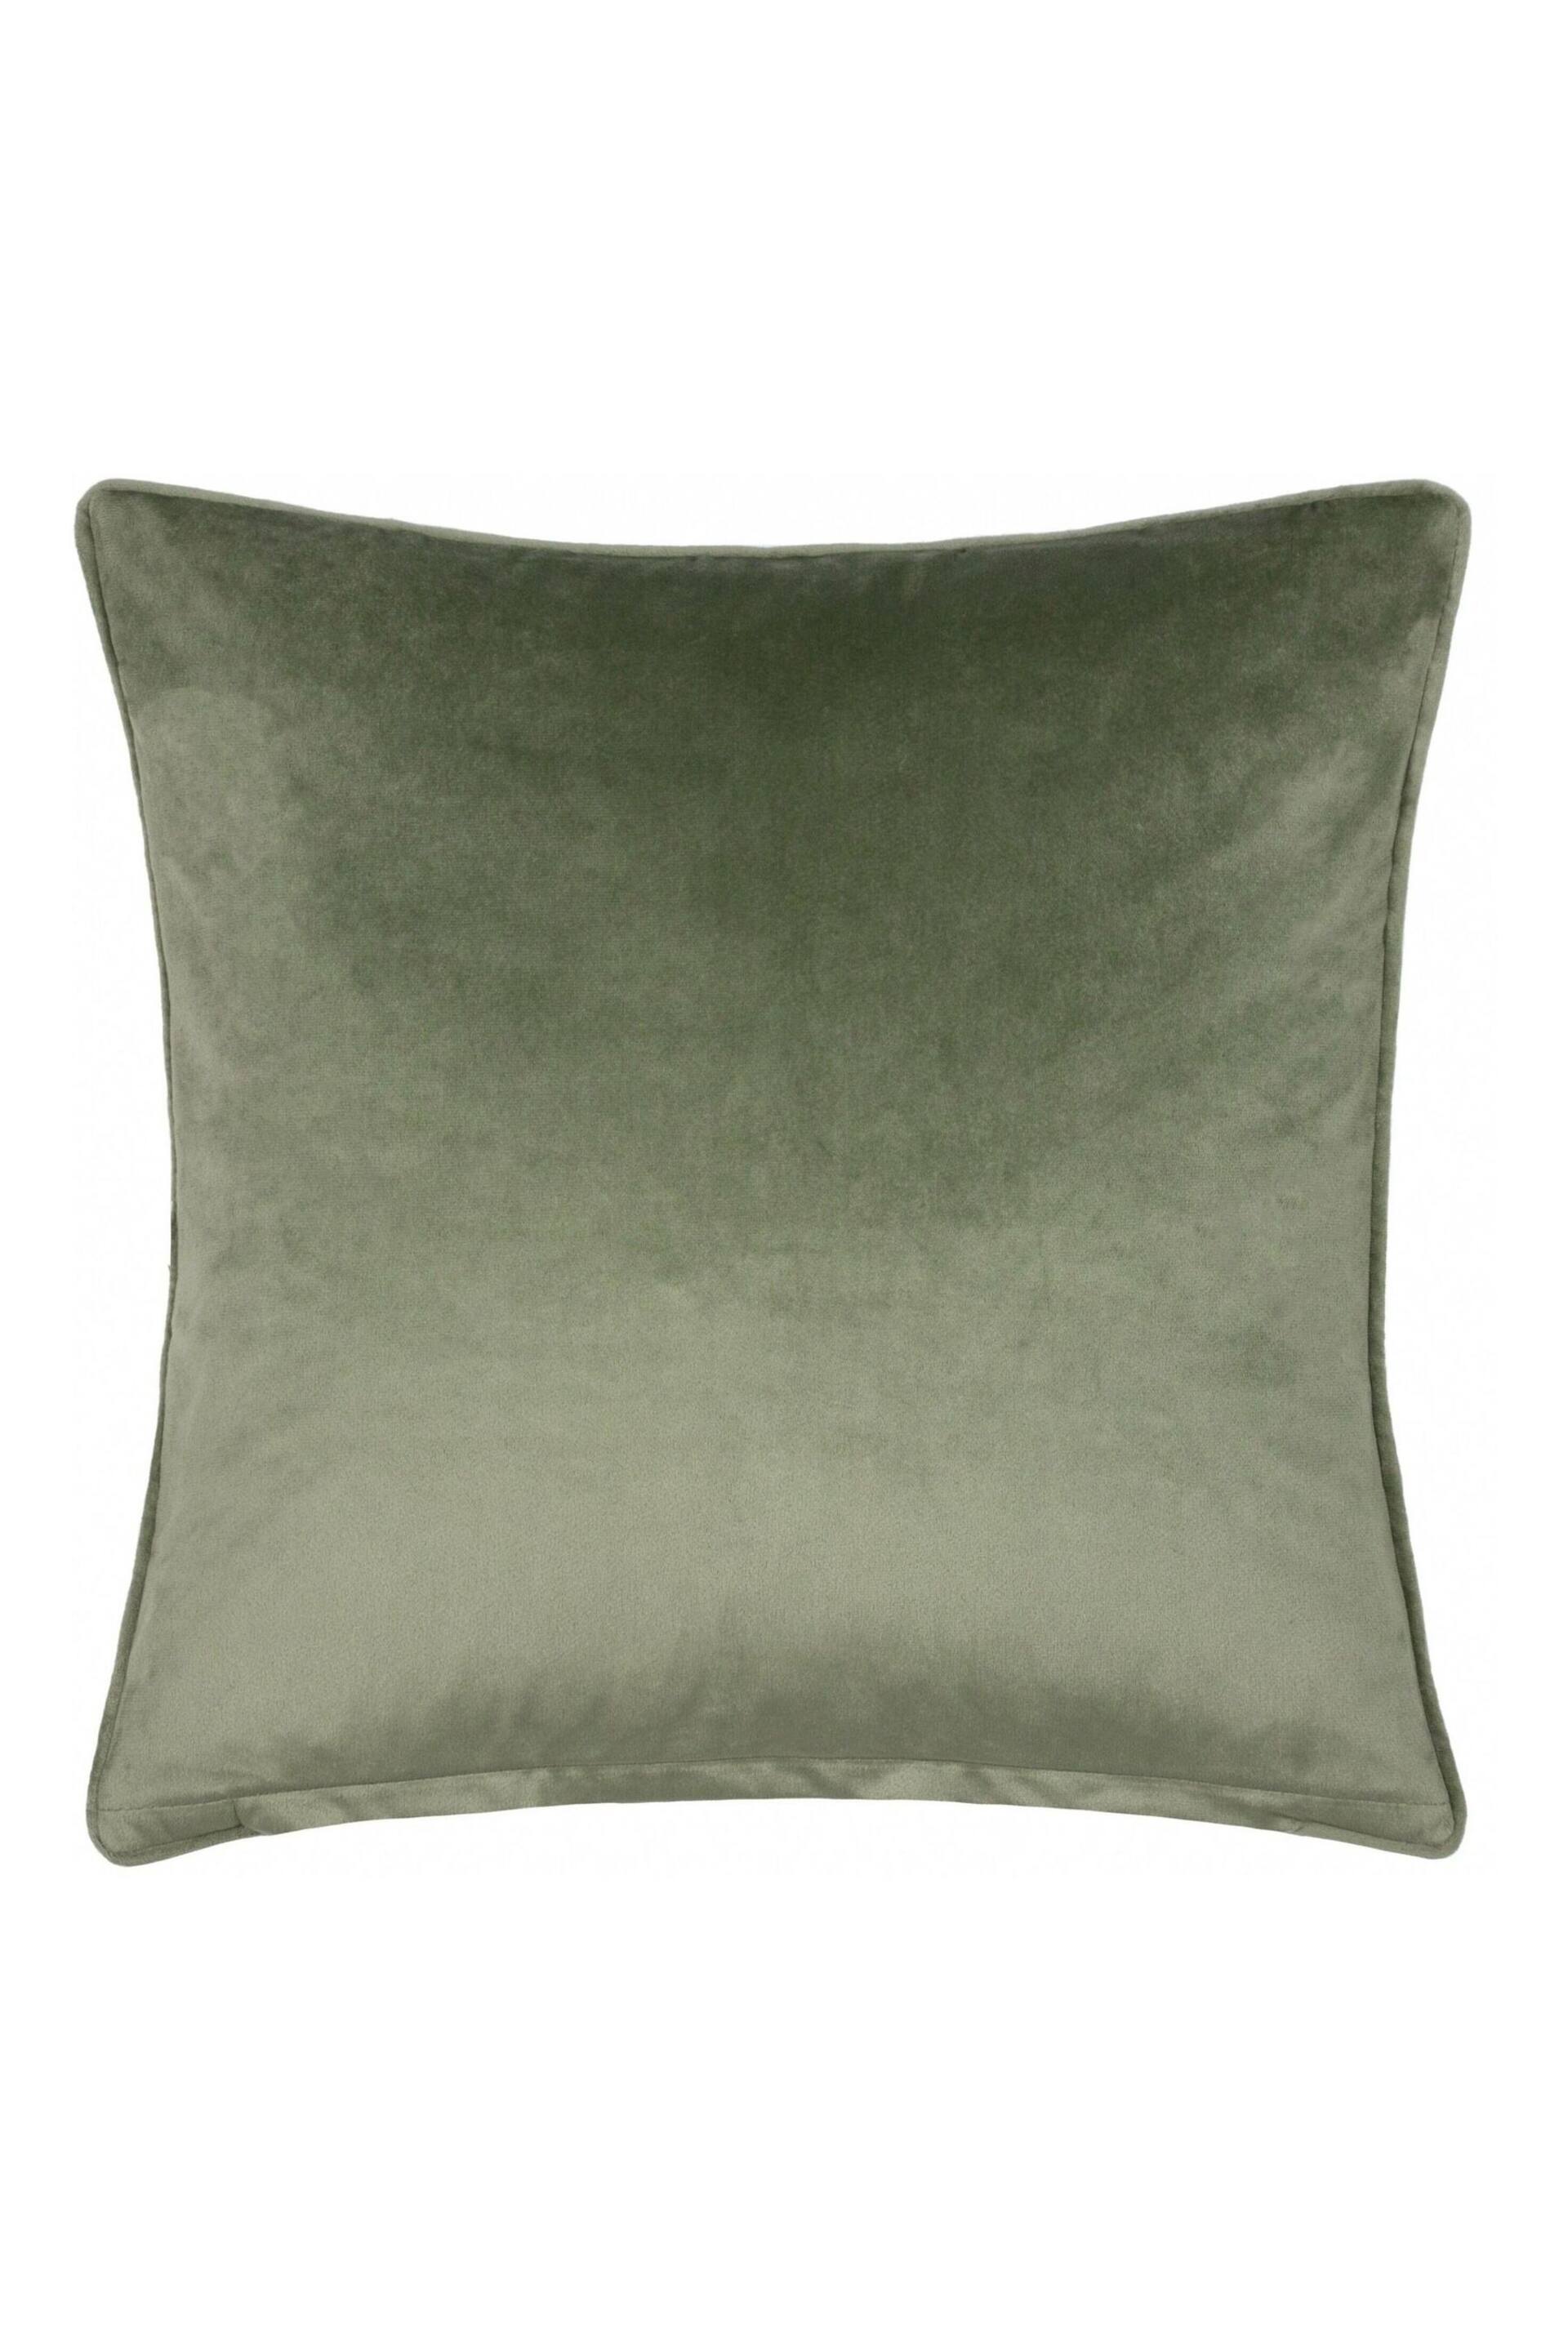 Furn Green Marttel Geometric Jacquard Feather Filled Cushion - Image 4 of 6